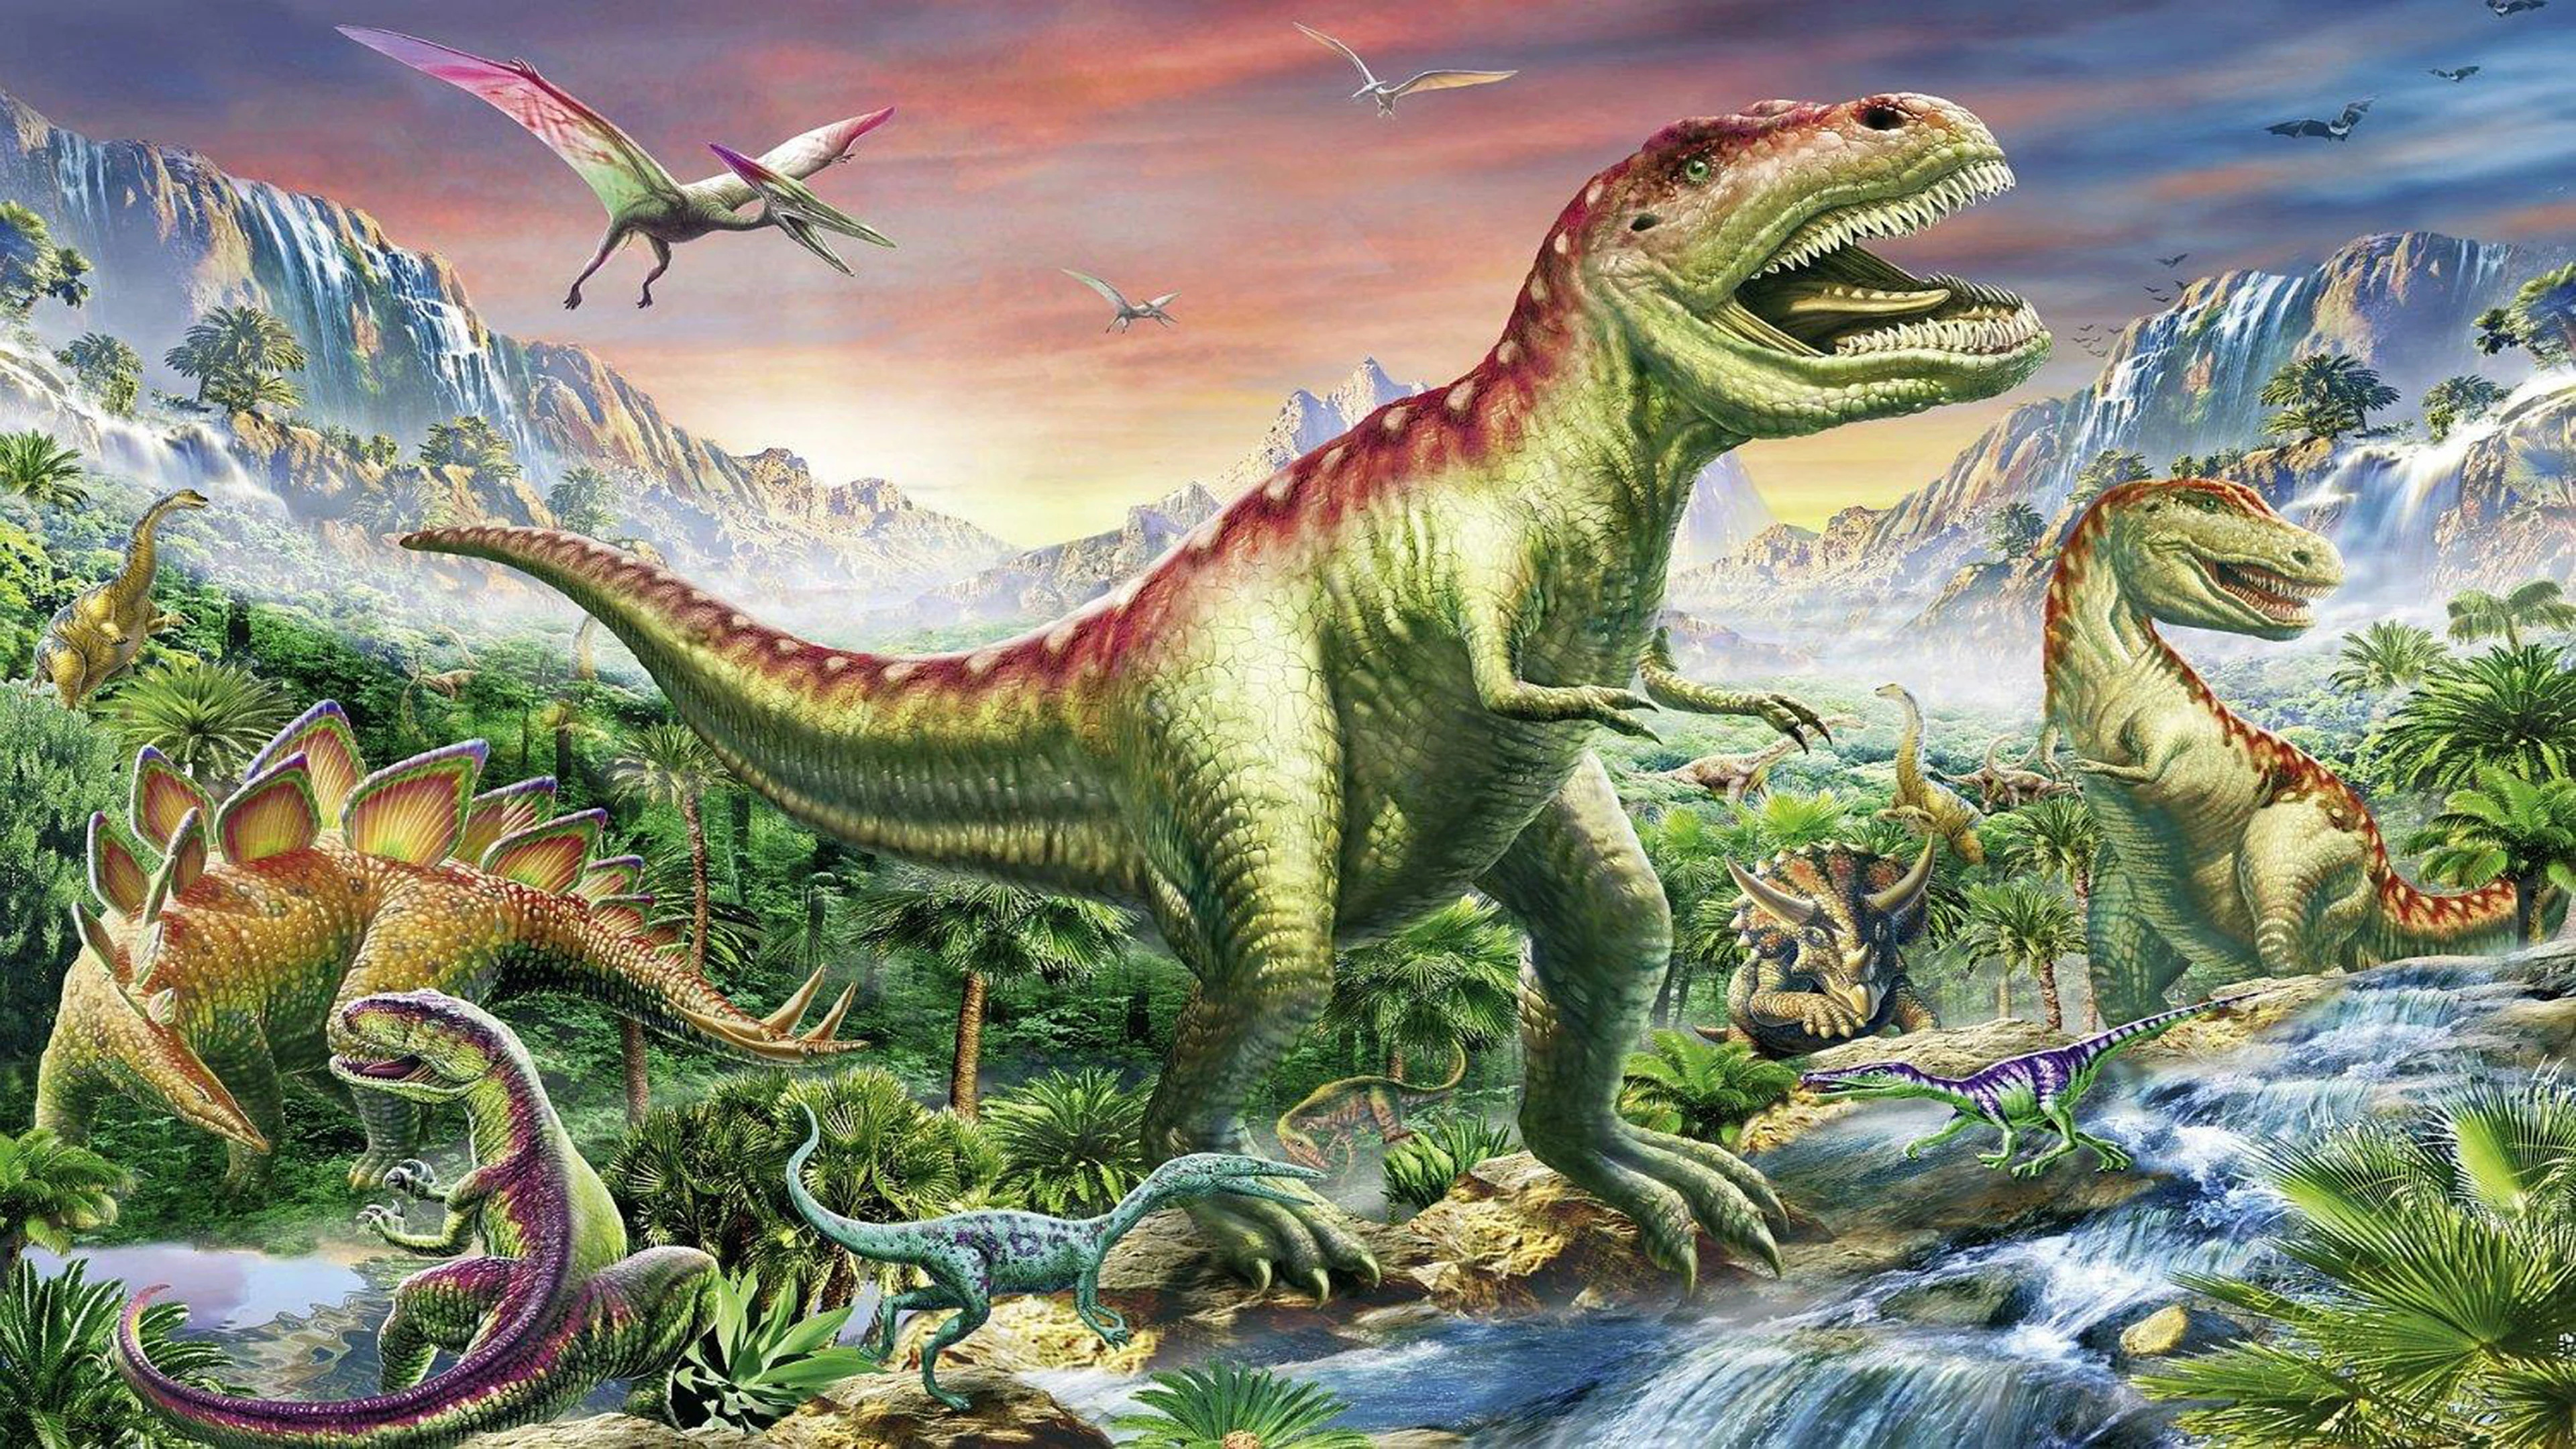 Cute dinosaurs, Colorful wallpapers, Cartoonish creatures, Playful dinosaur images, 3840x2160 4K Desktop